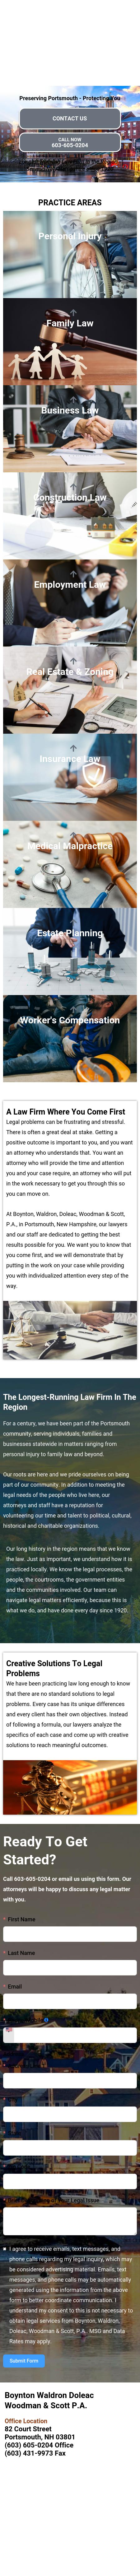 Boynton, Waldron, Doleac, Woodman & Scott, P.A. - Portsmouth NH Lawyers